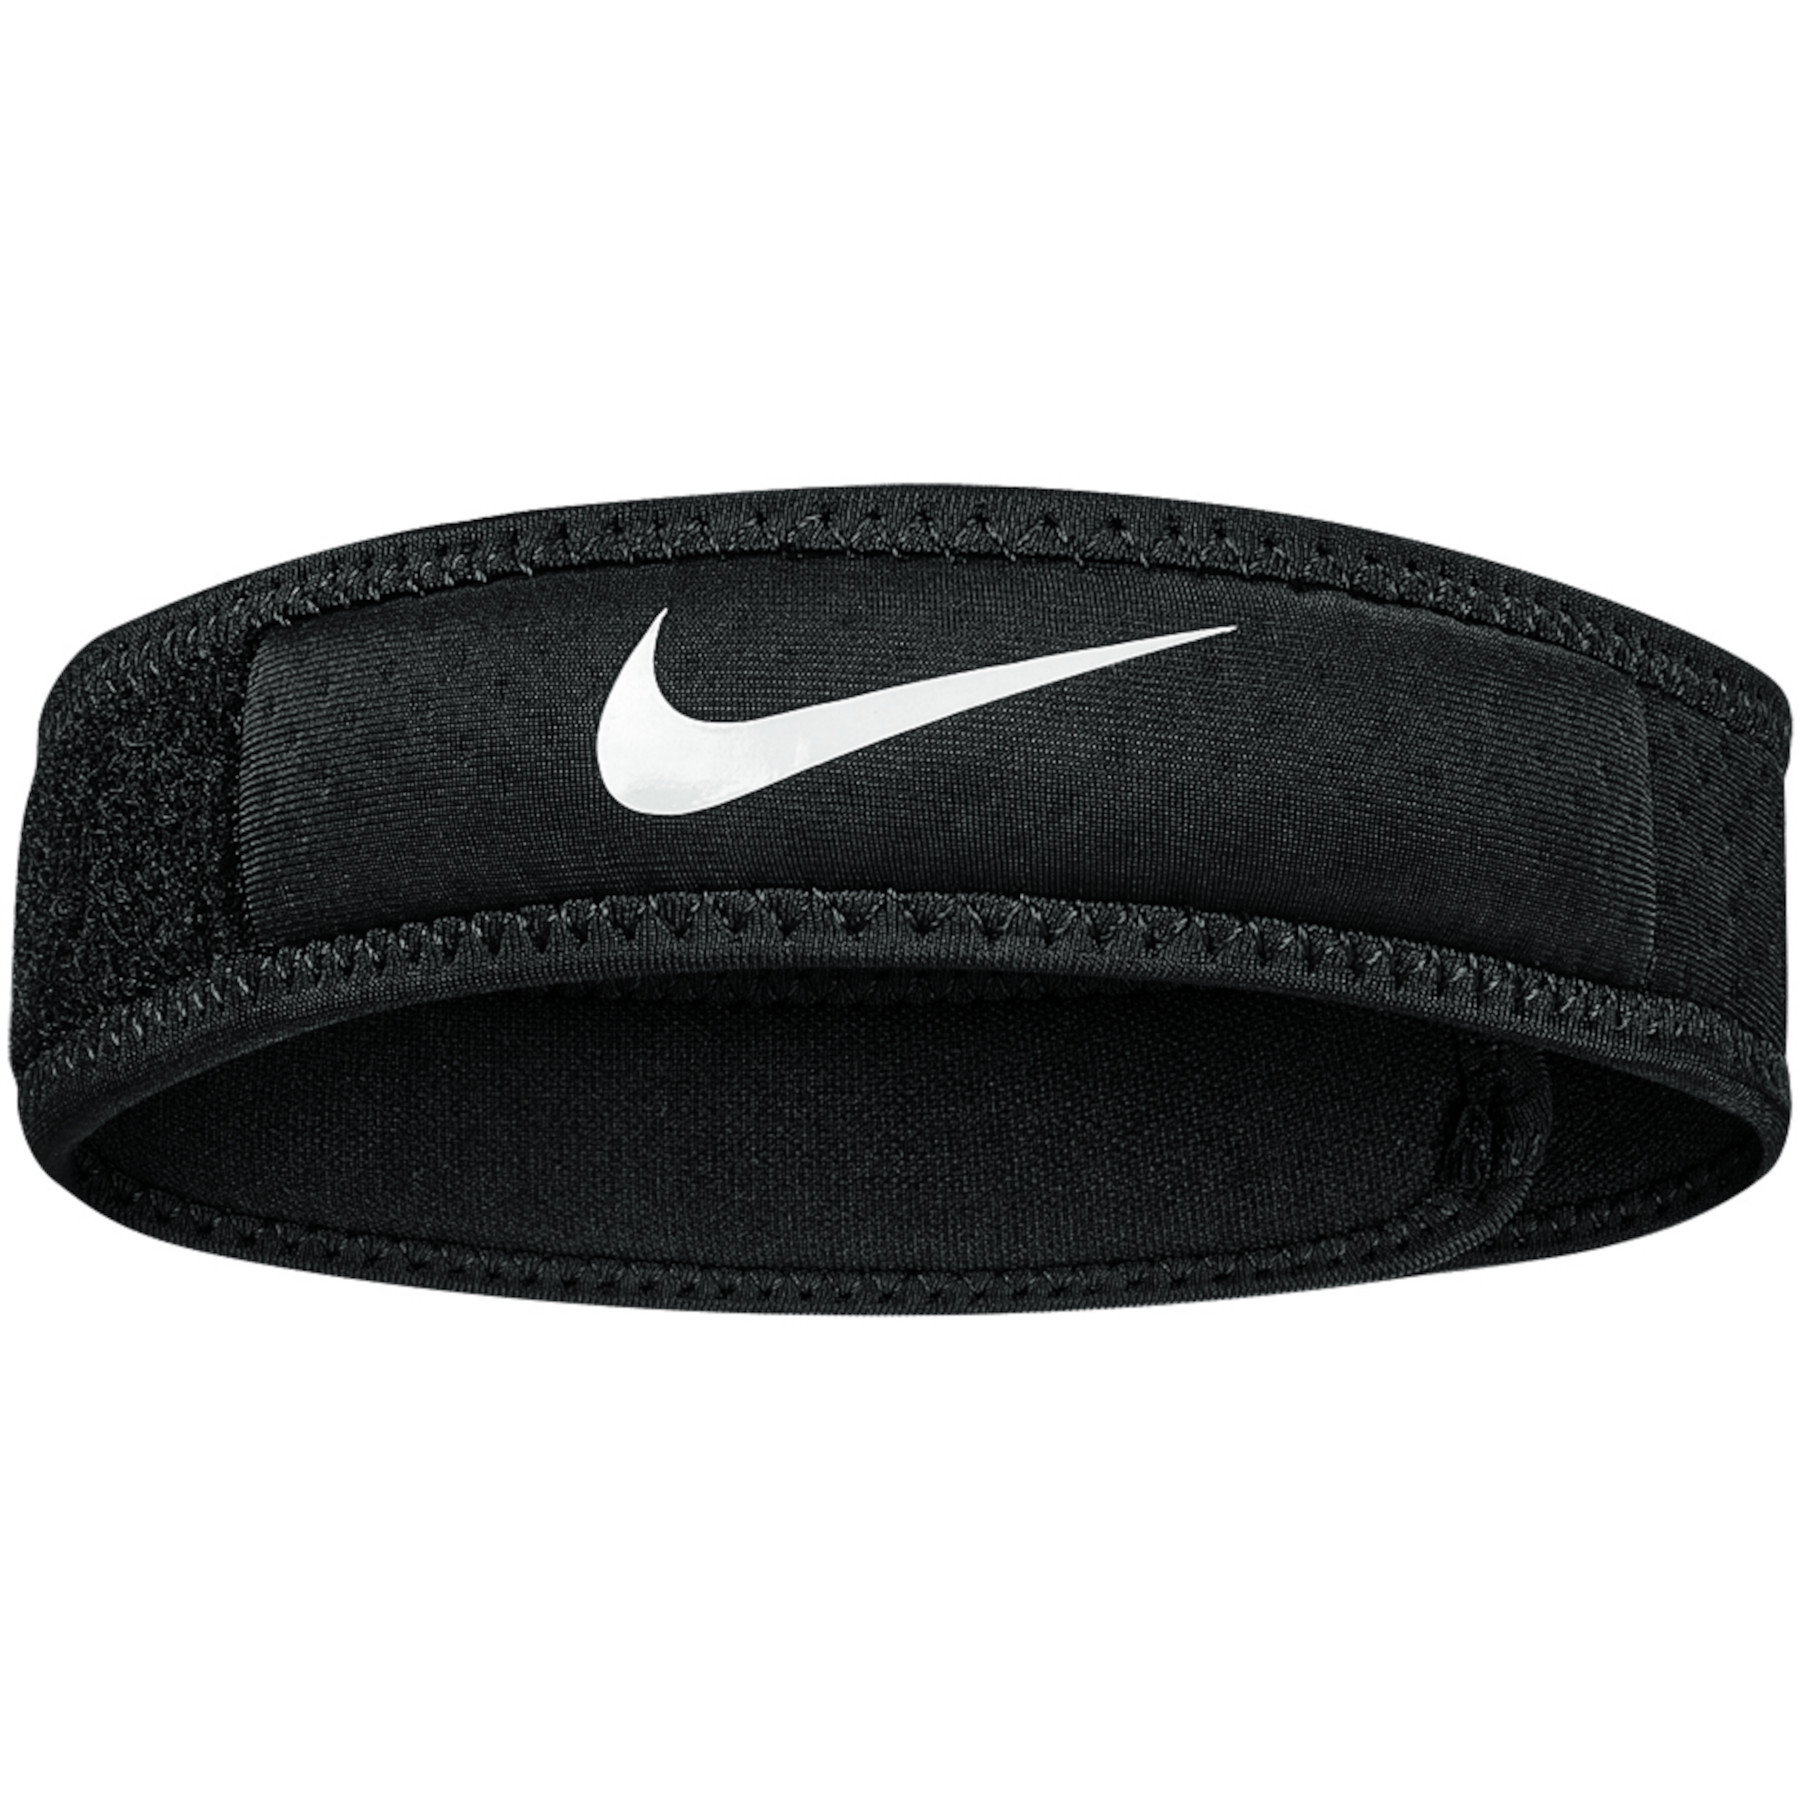 Productfoto van Nike Pro Patella Band 3.0 - black/white 010